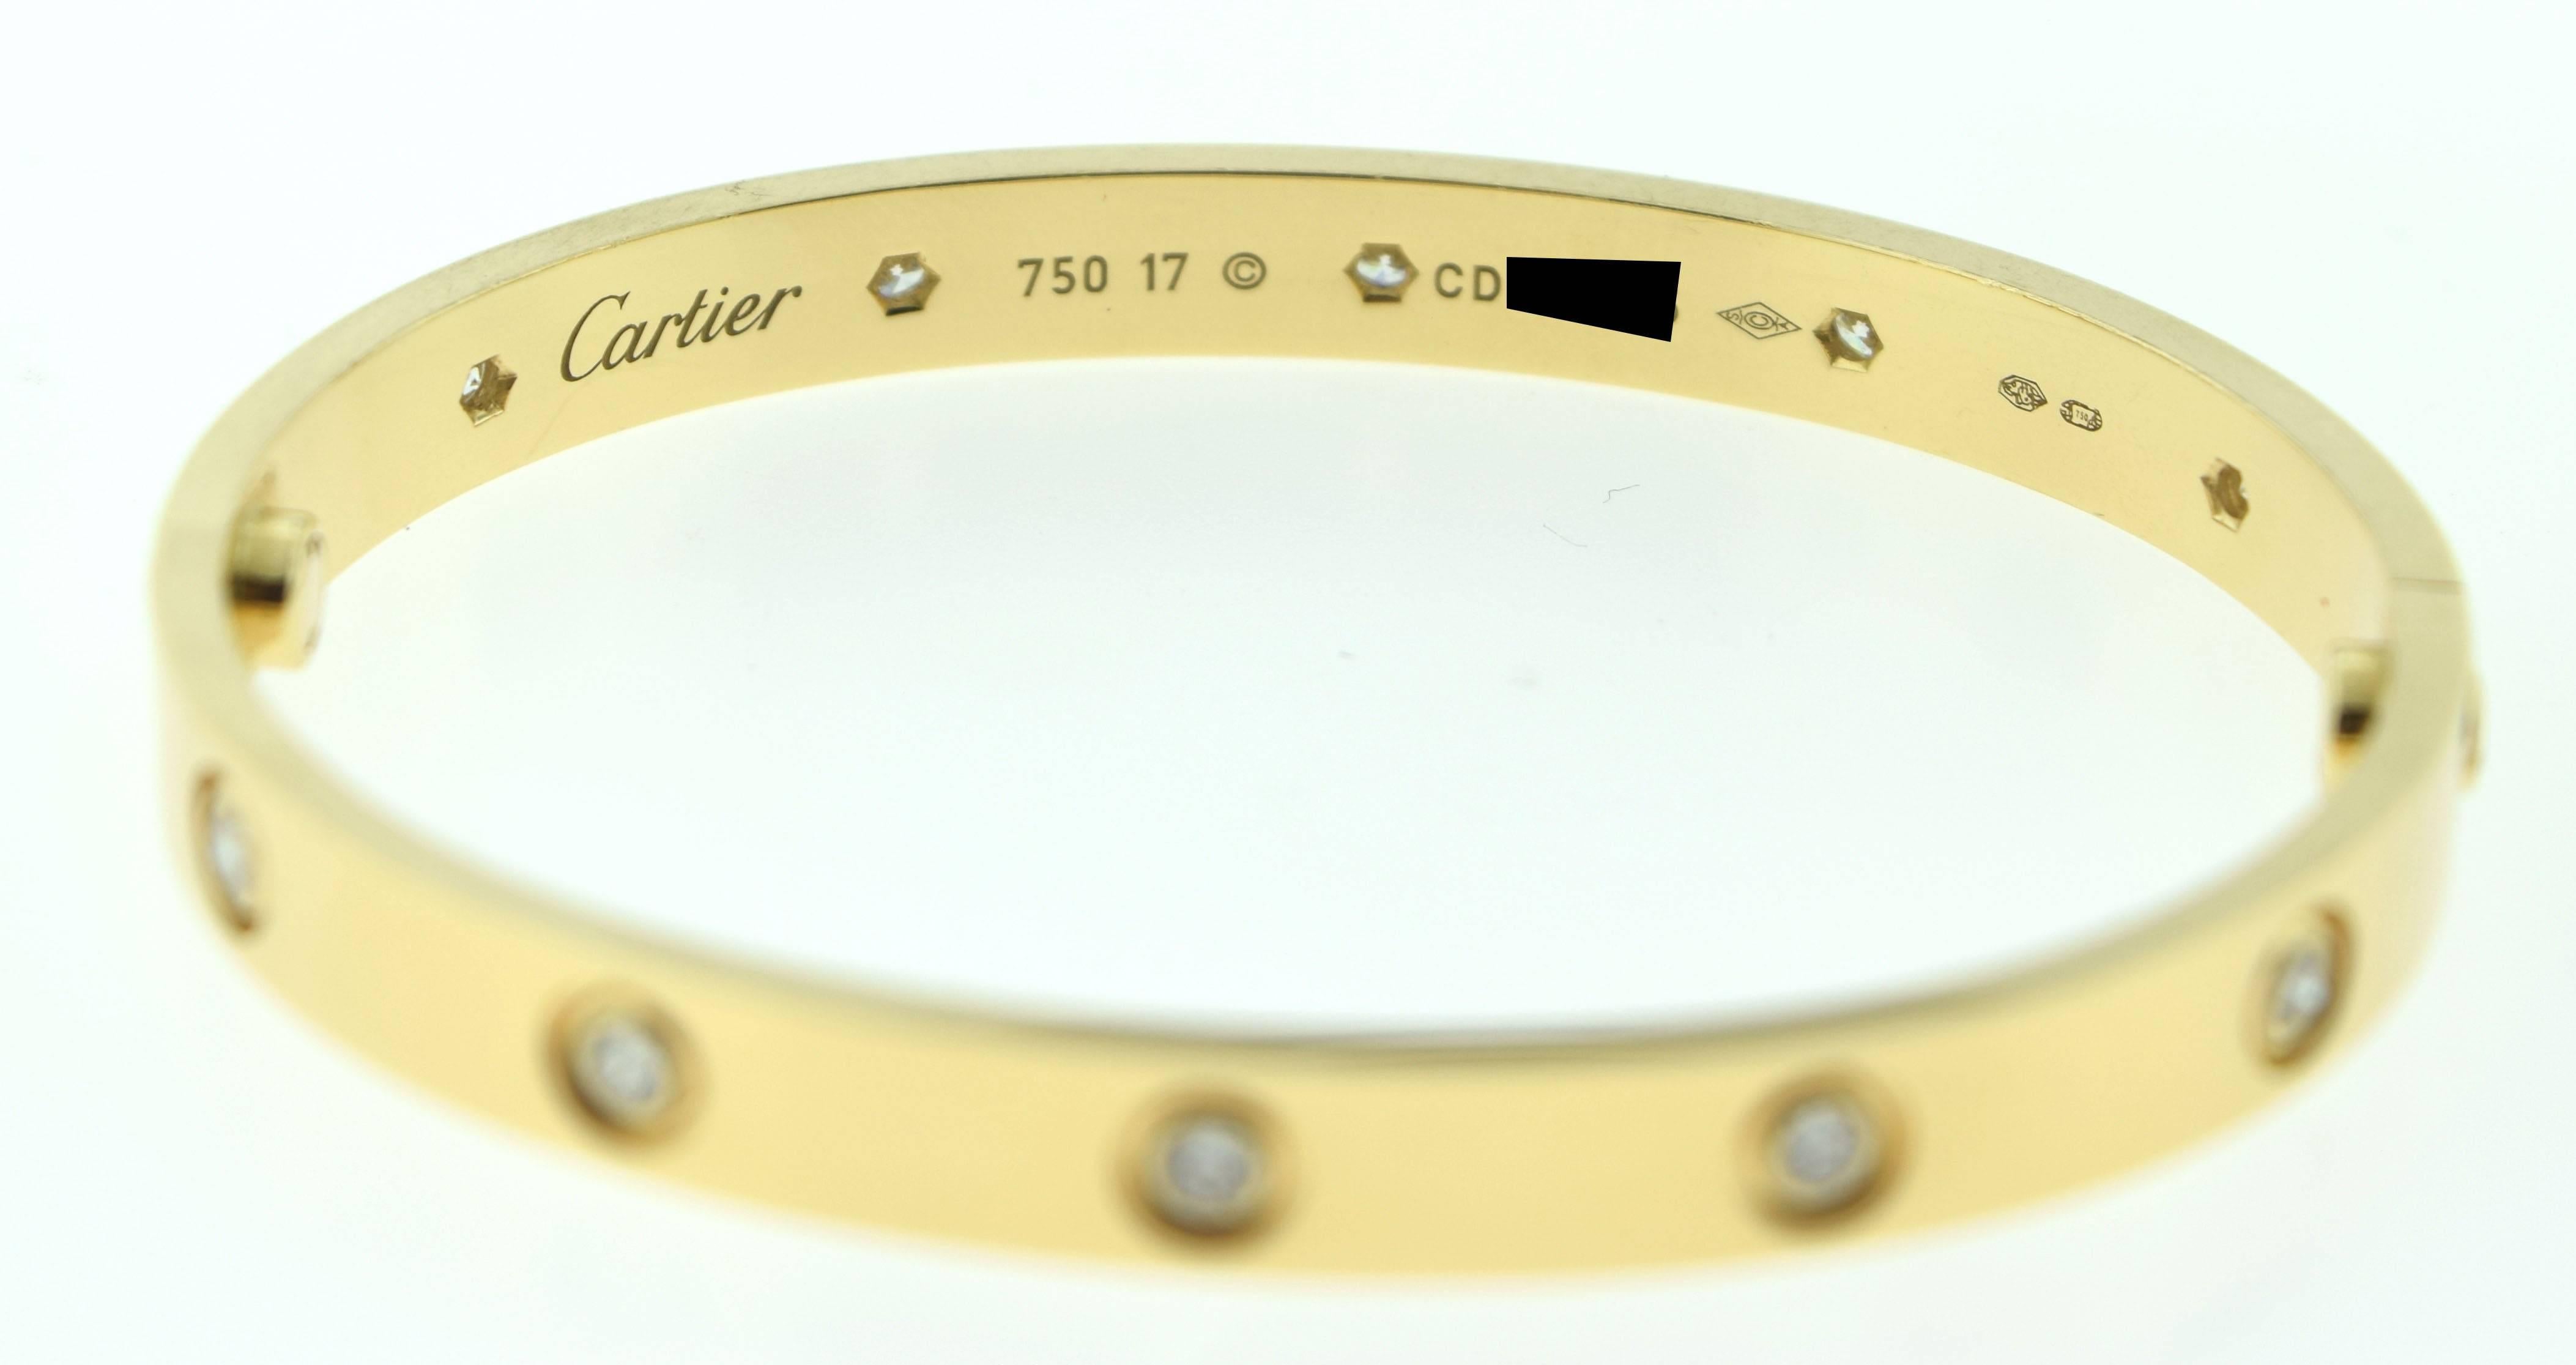 Size: 17
Brand/Designer: Cartier
Collection: LOVE
Metal: Yellow Gold
Metal Purity: 18 karat
Stones: 10 Round Brilliant Diamonds
Diamond Color / Clarity: 
Weight: 33.0 grams
Hallmark: Cartier 750 17 CD**** (Erased 4 Privacy)
Includes: Box &